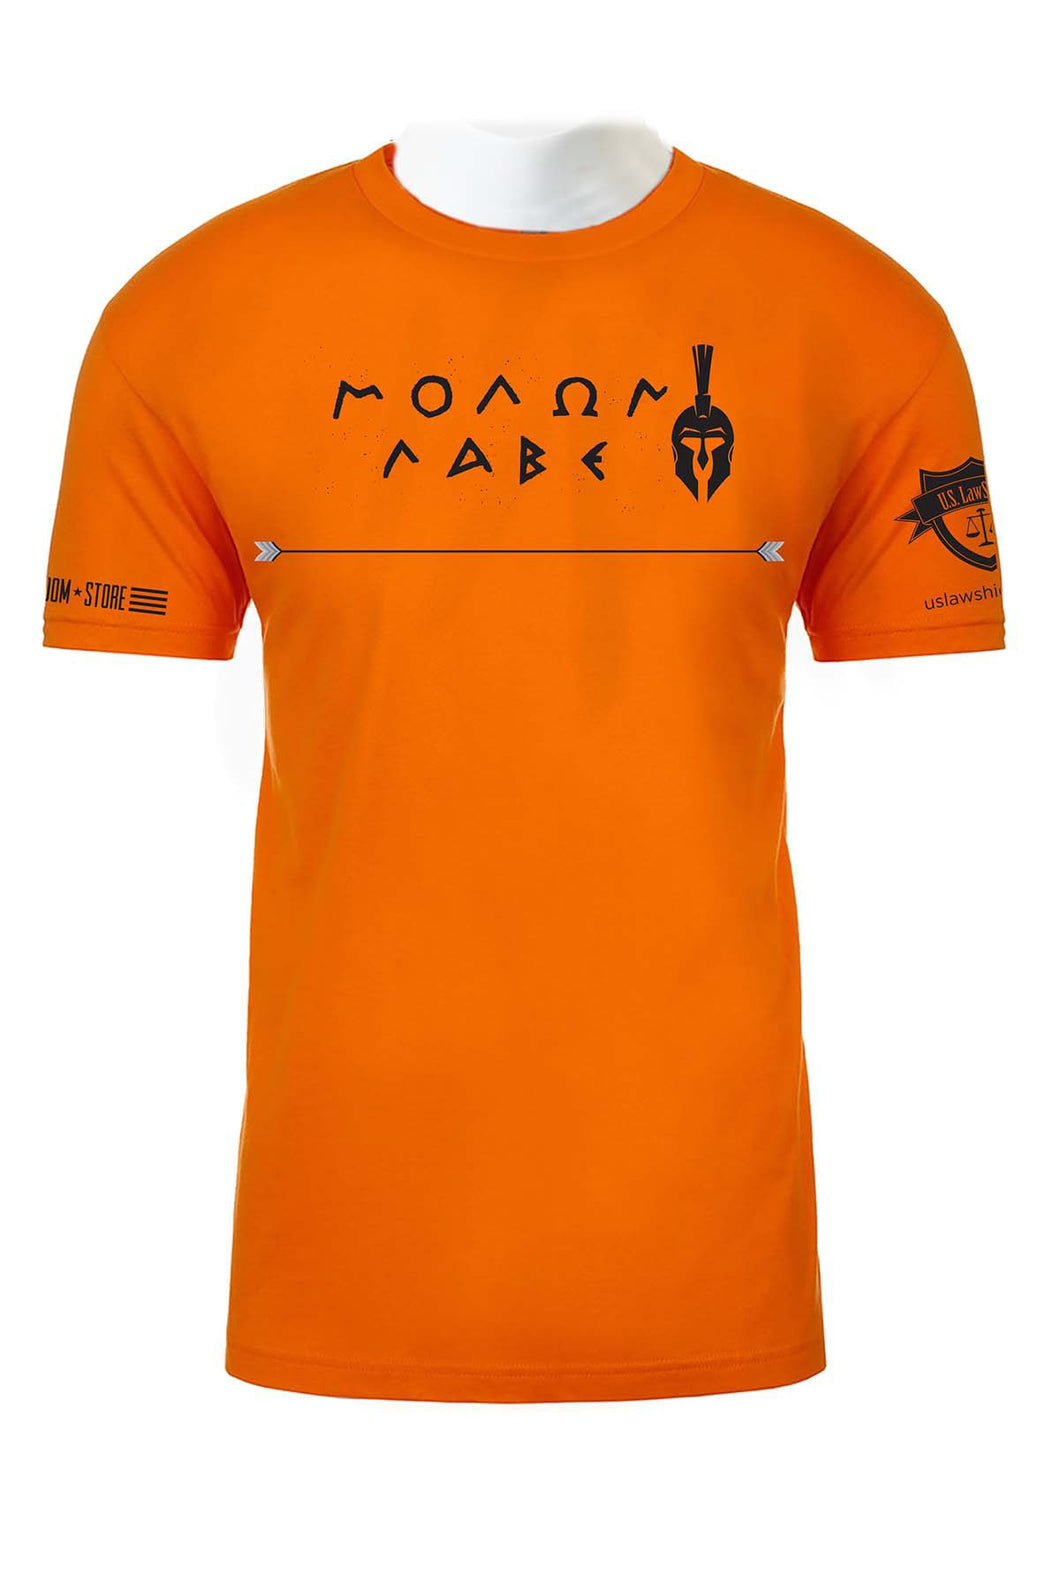 Molon Labe T-Shirt